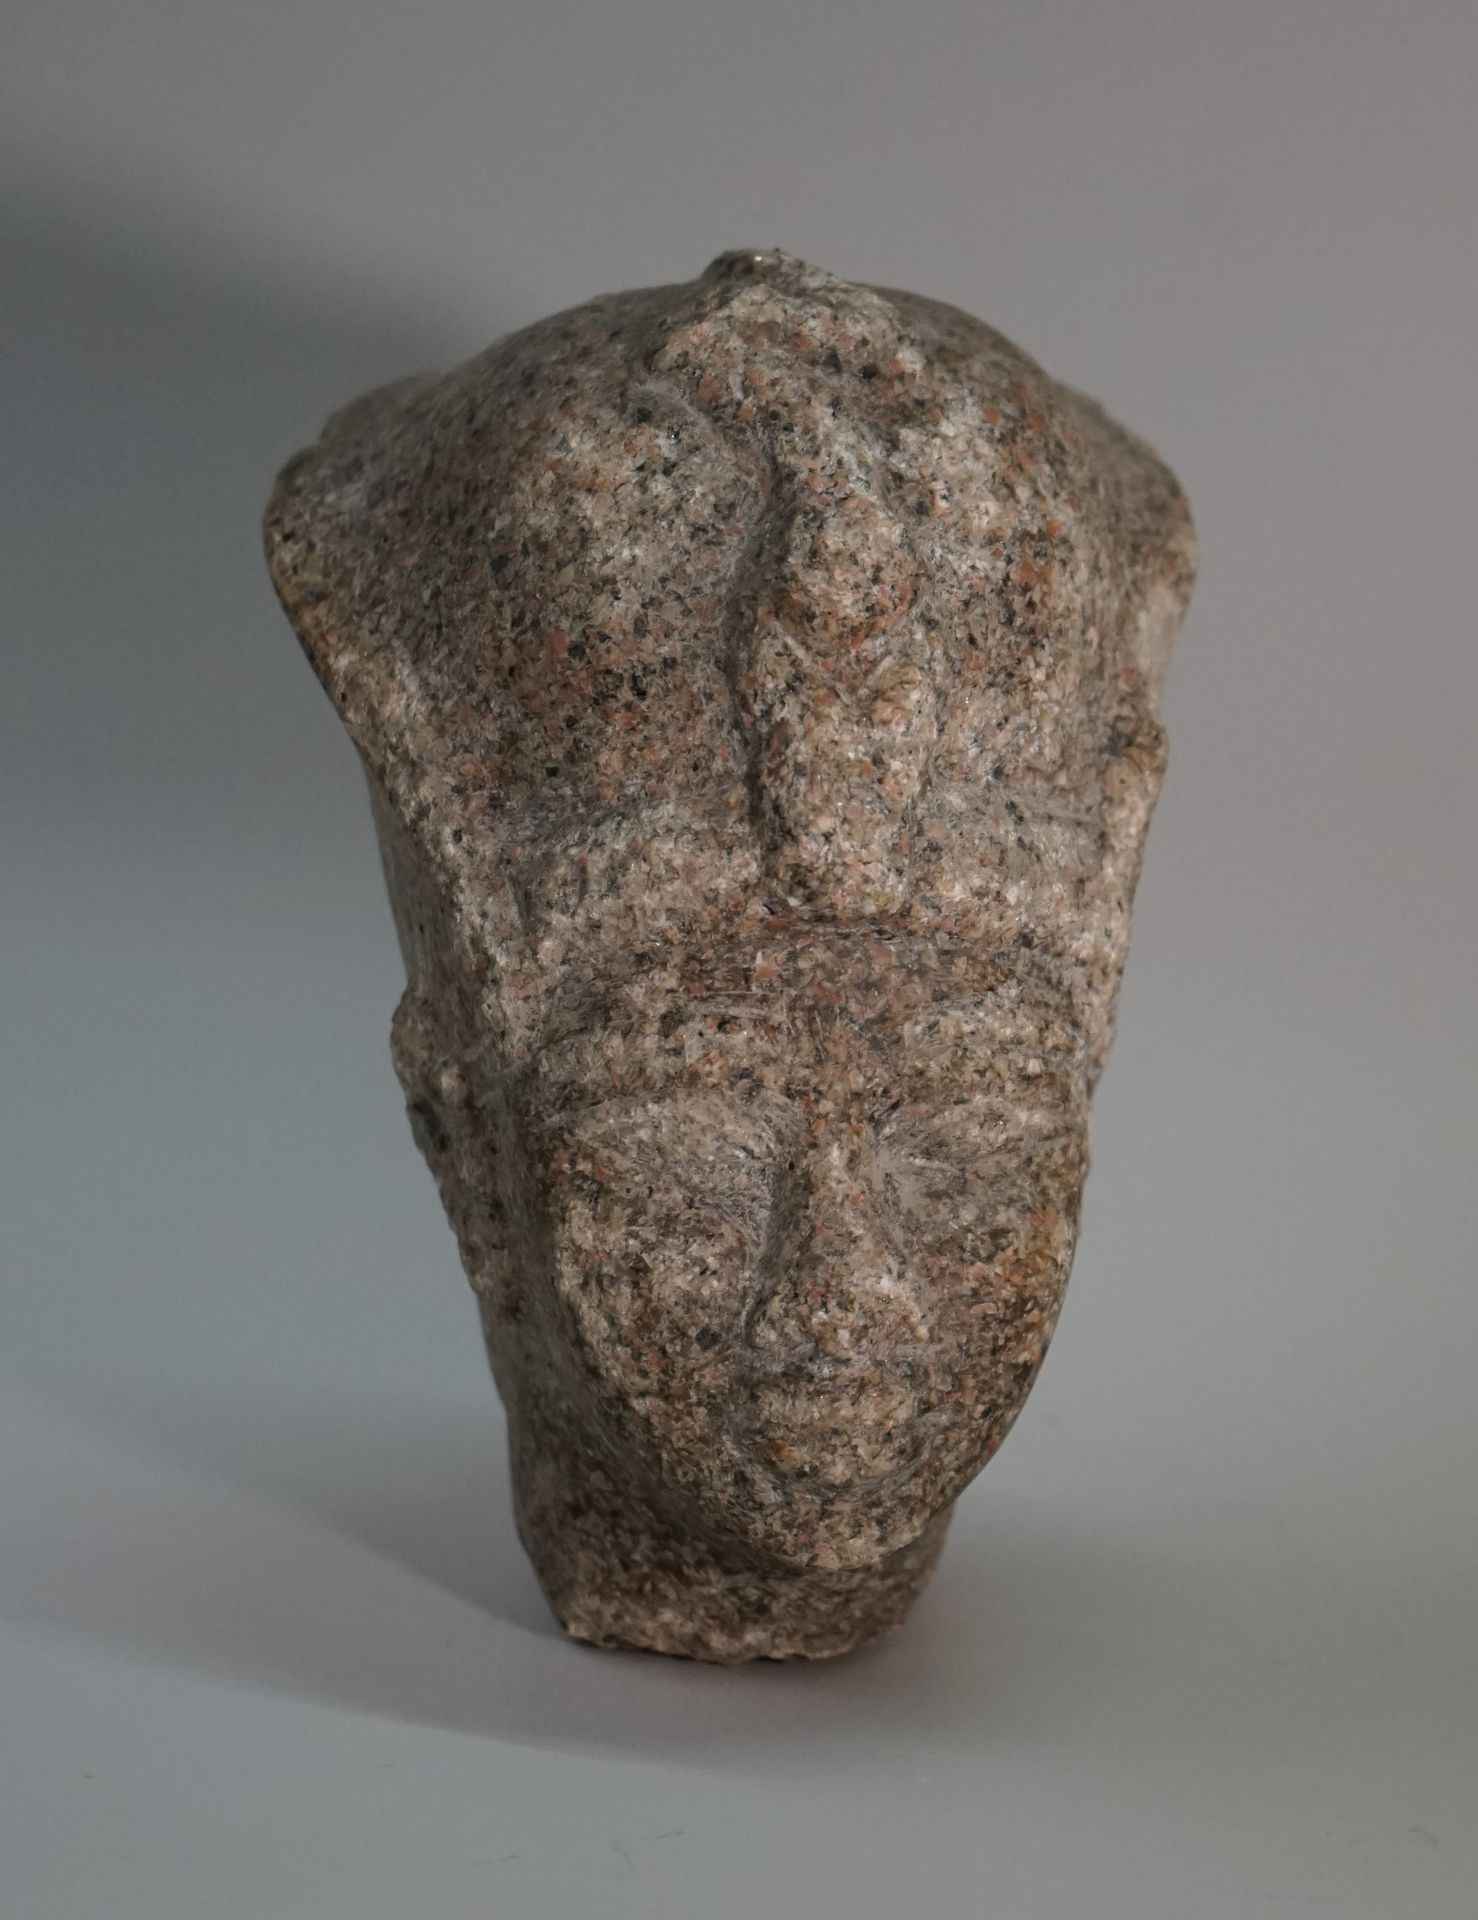 Null 代表法老的石头。

古埃及的作品

高：14.5厘米